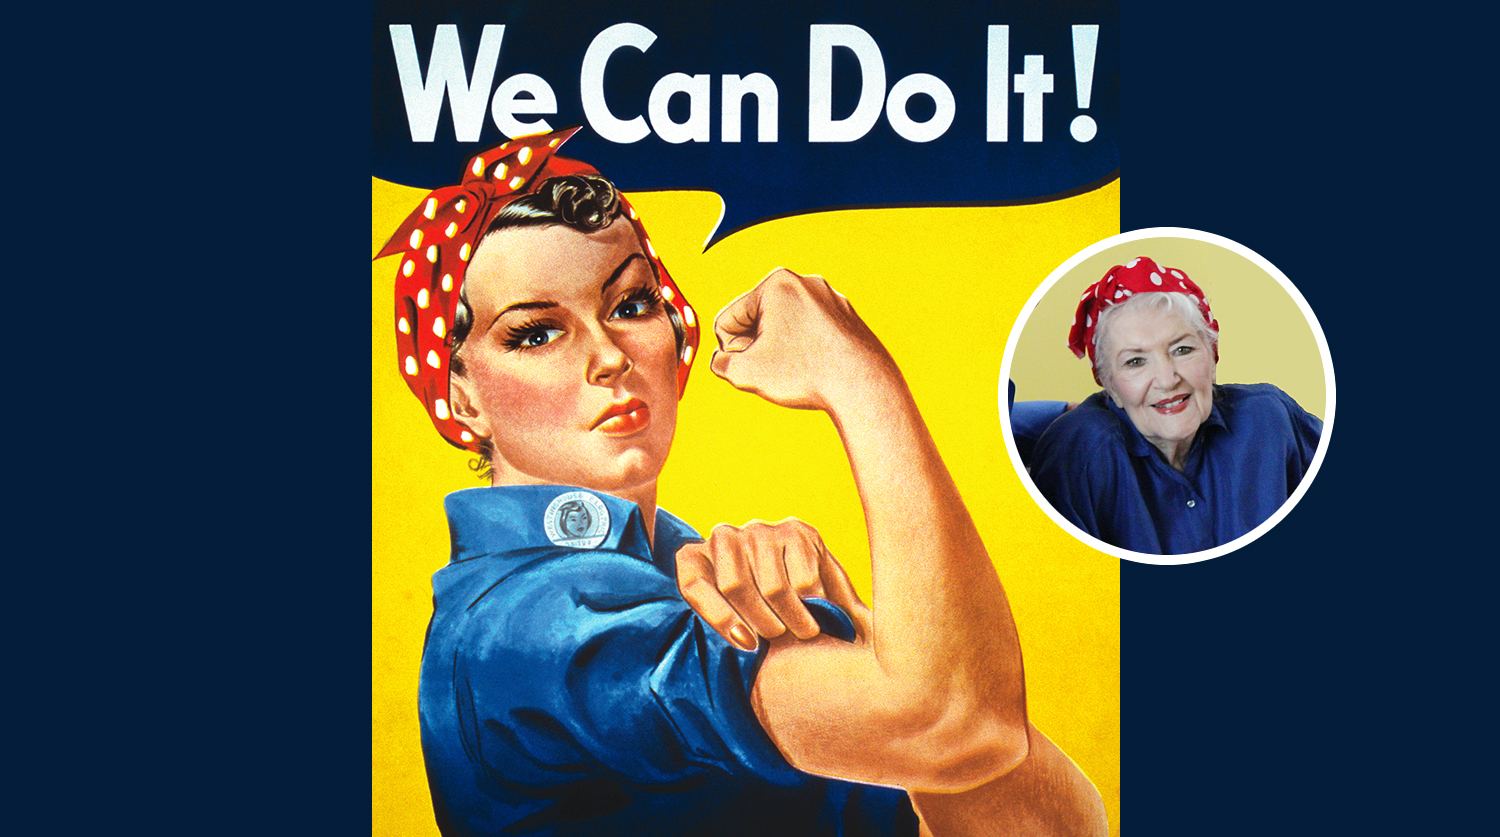 Yes we were. Клепальщица Рози плакат. Плакат «we can do it! ». Yes we can плакат. Клепальщица Рози агитационный плакат.